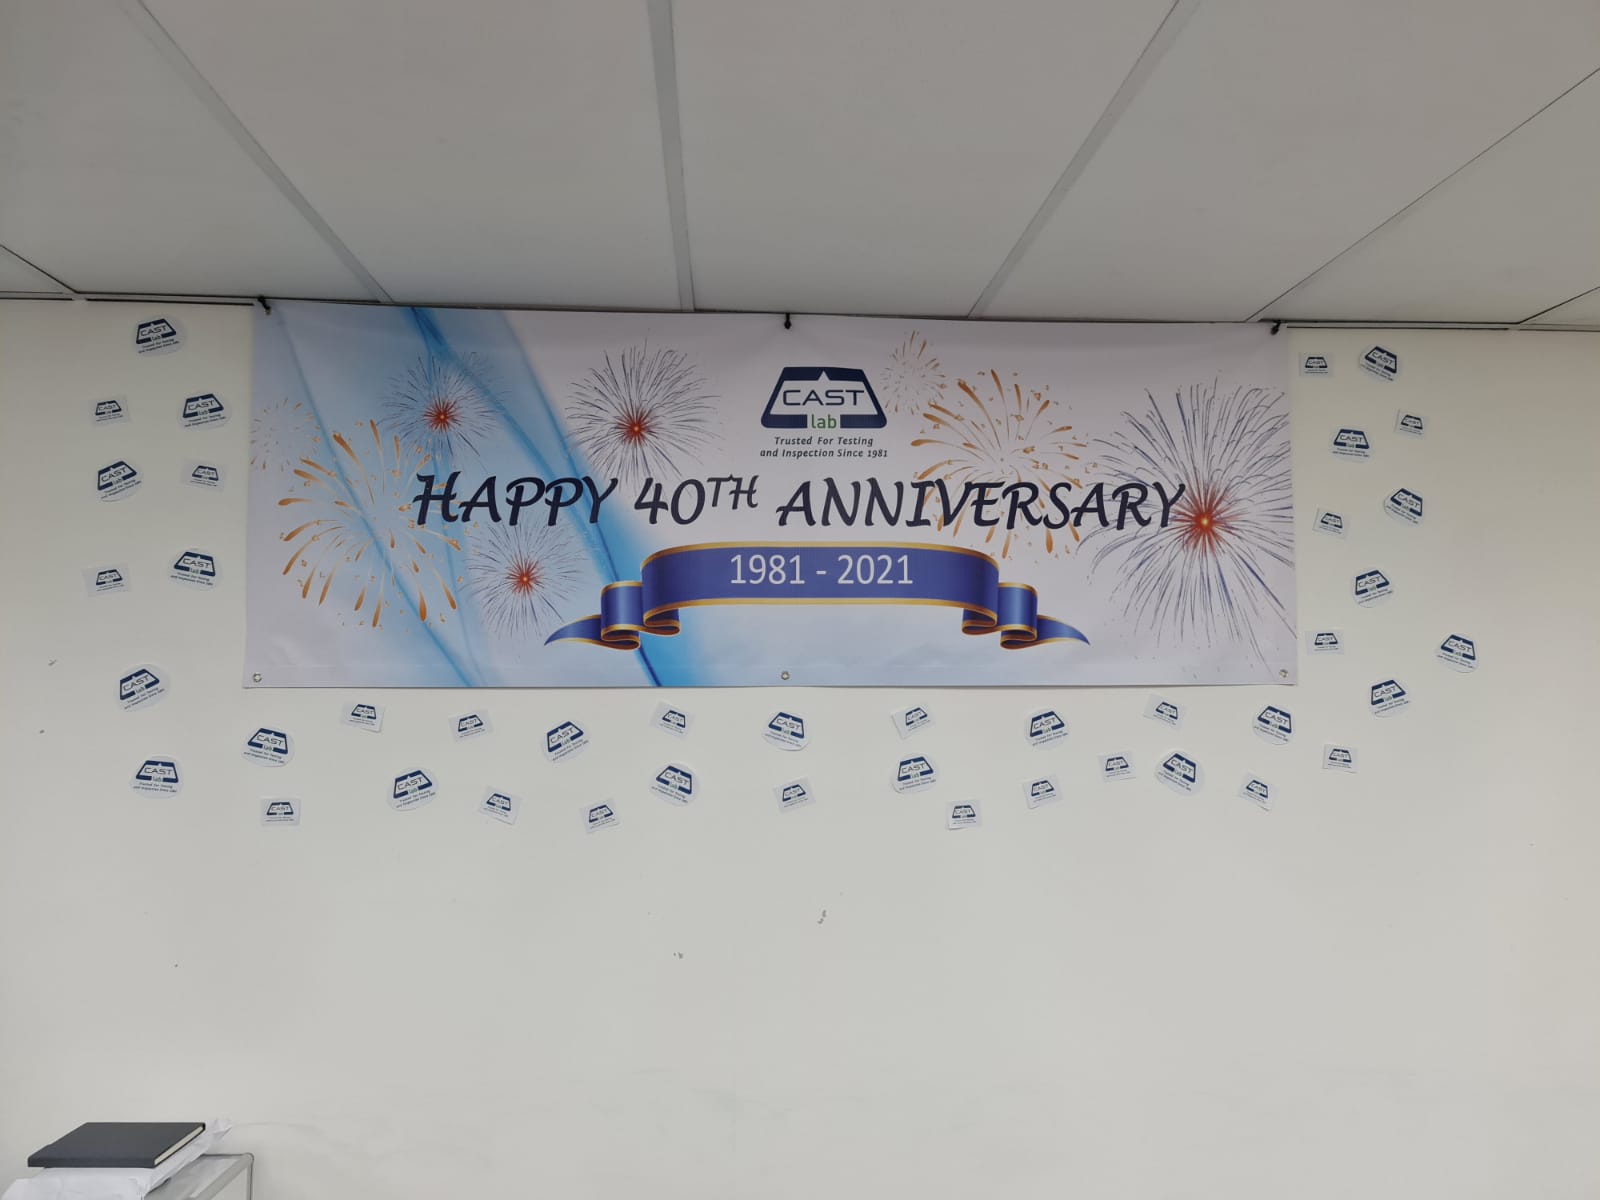 CAST Lab's 40th Anniversary